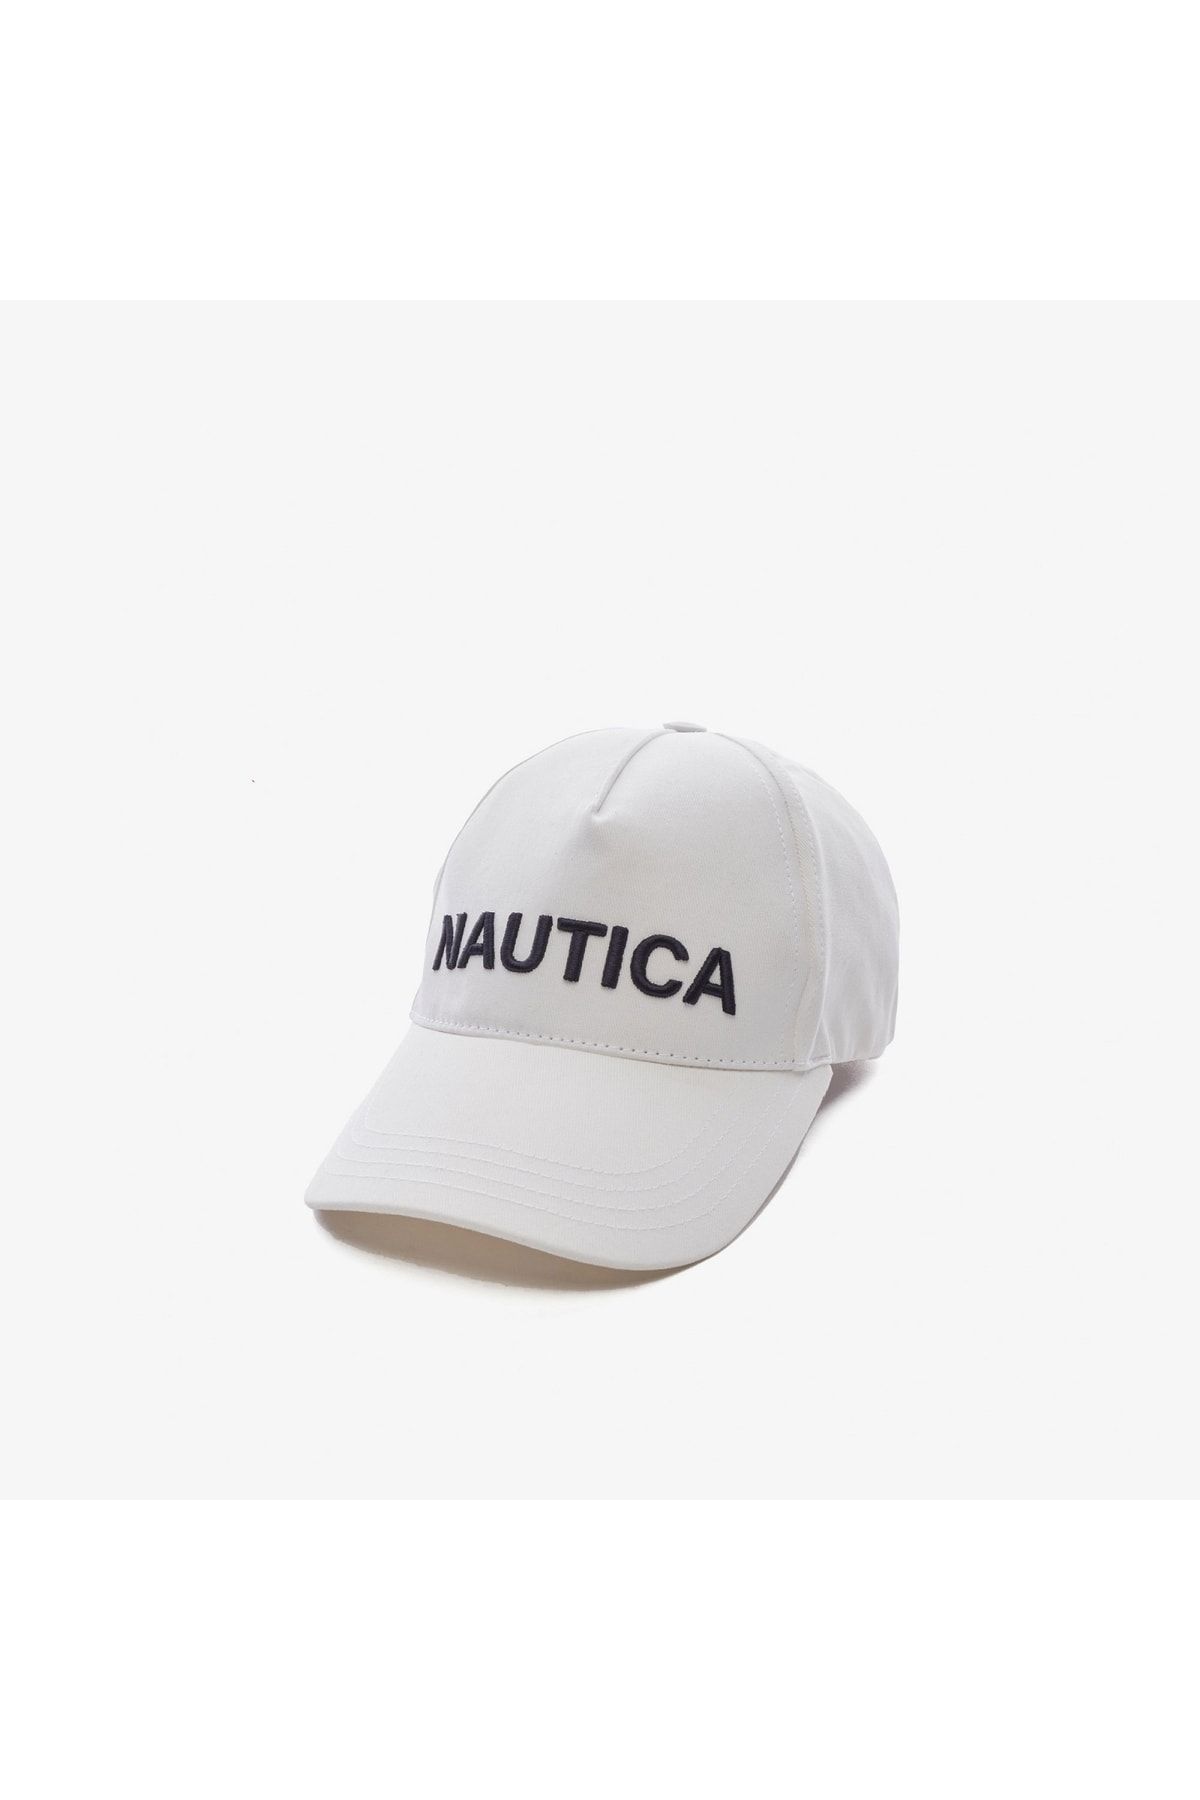 Nautica کلاه سفید بچه های Nauca